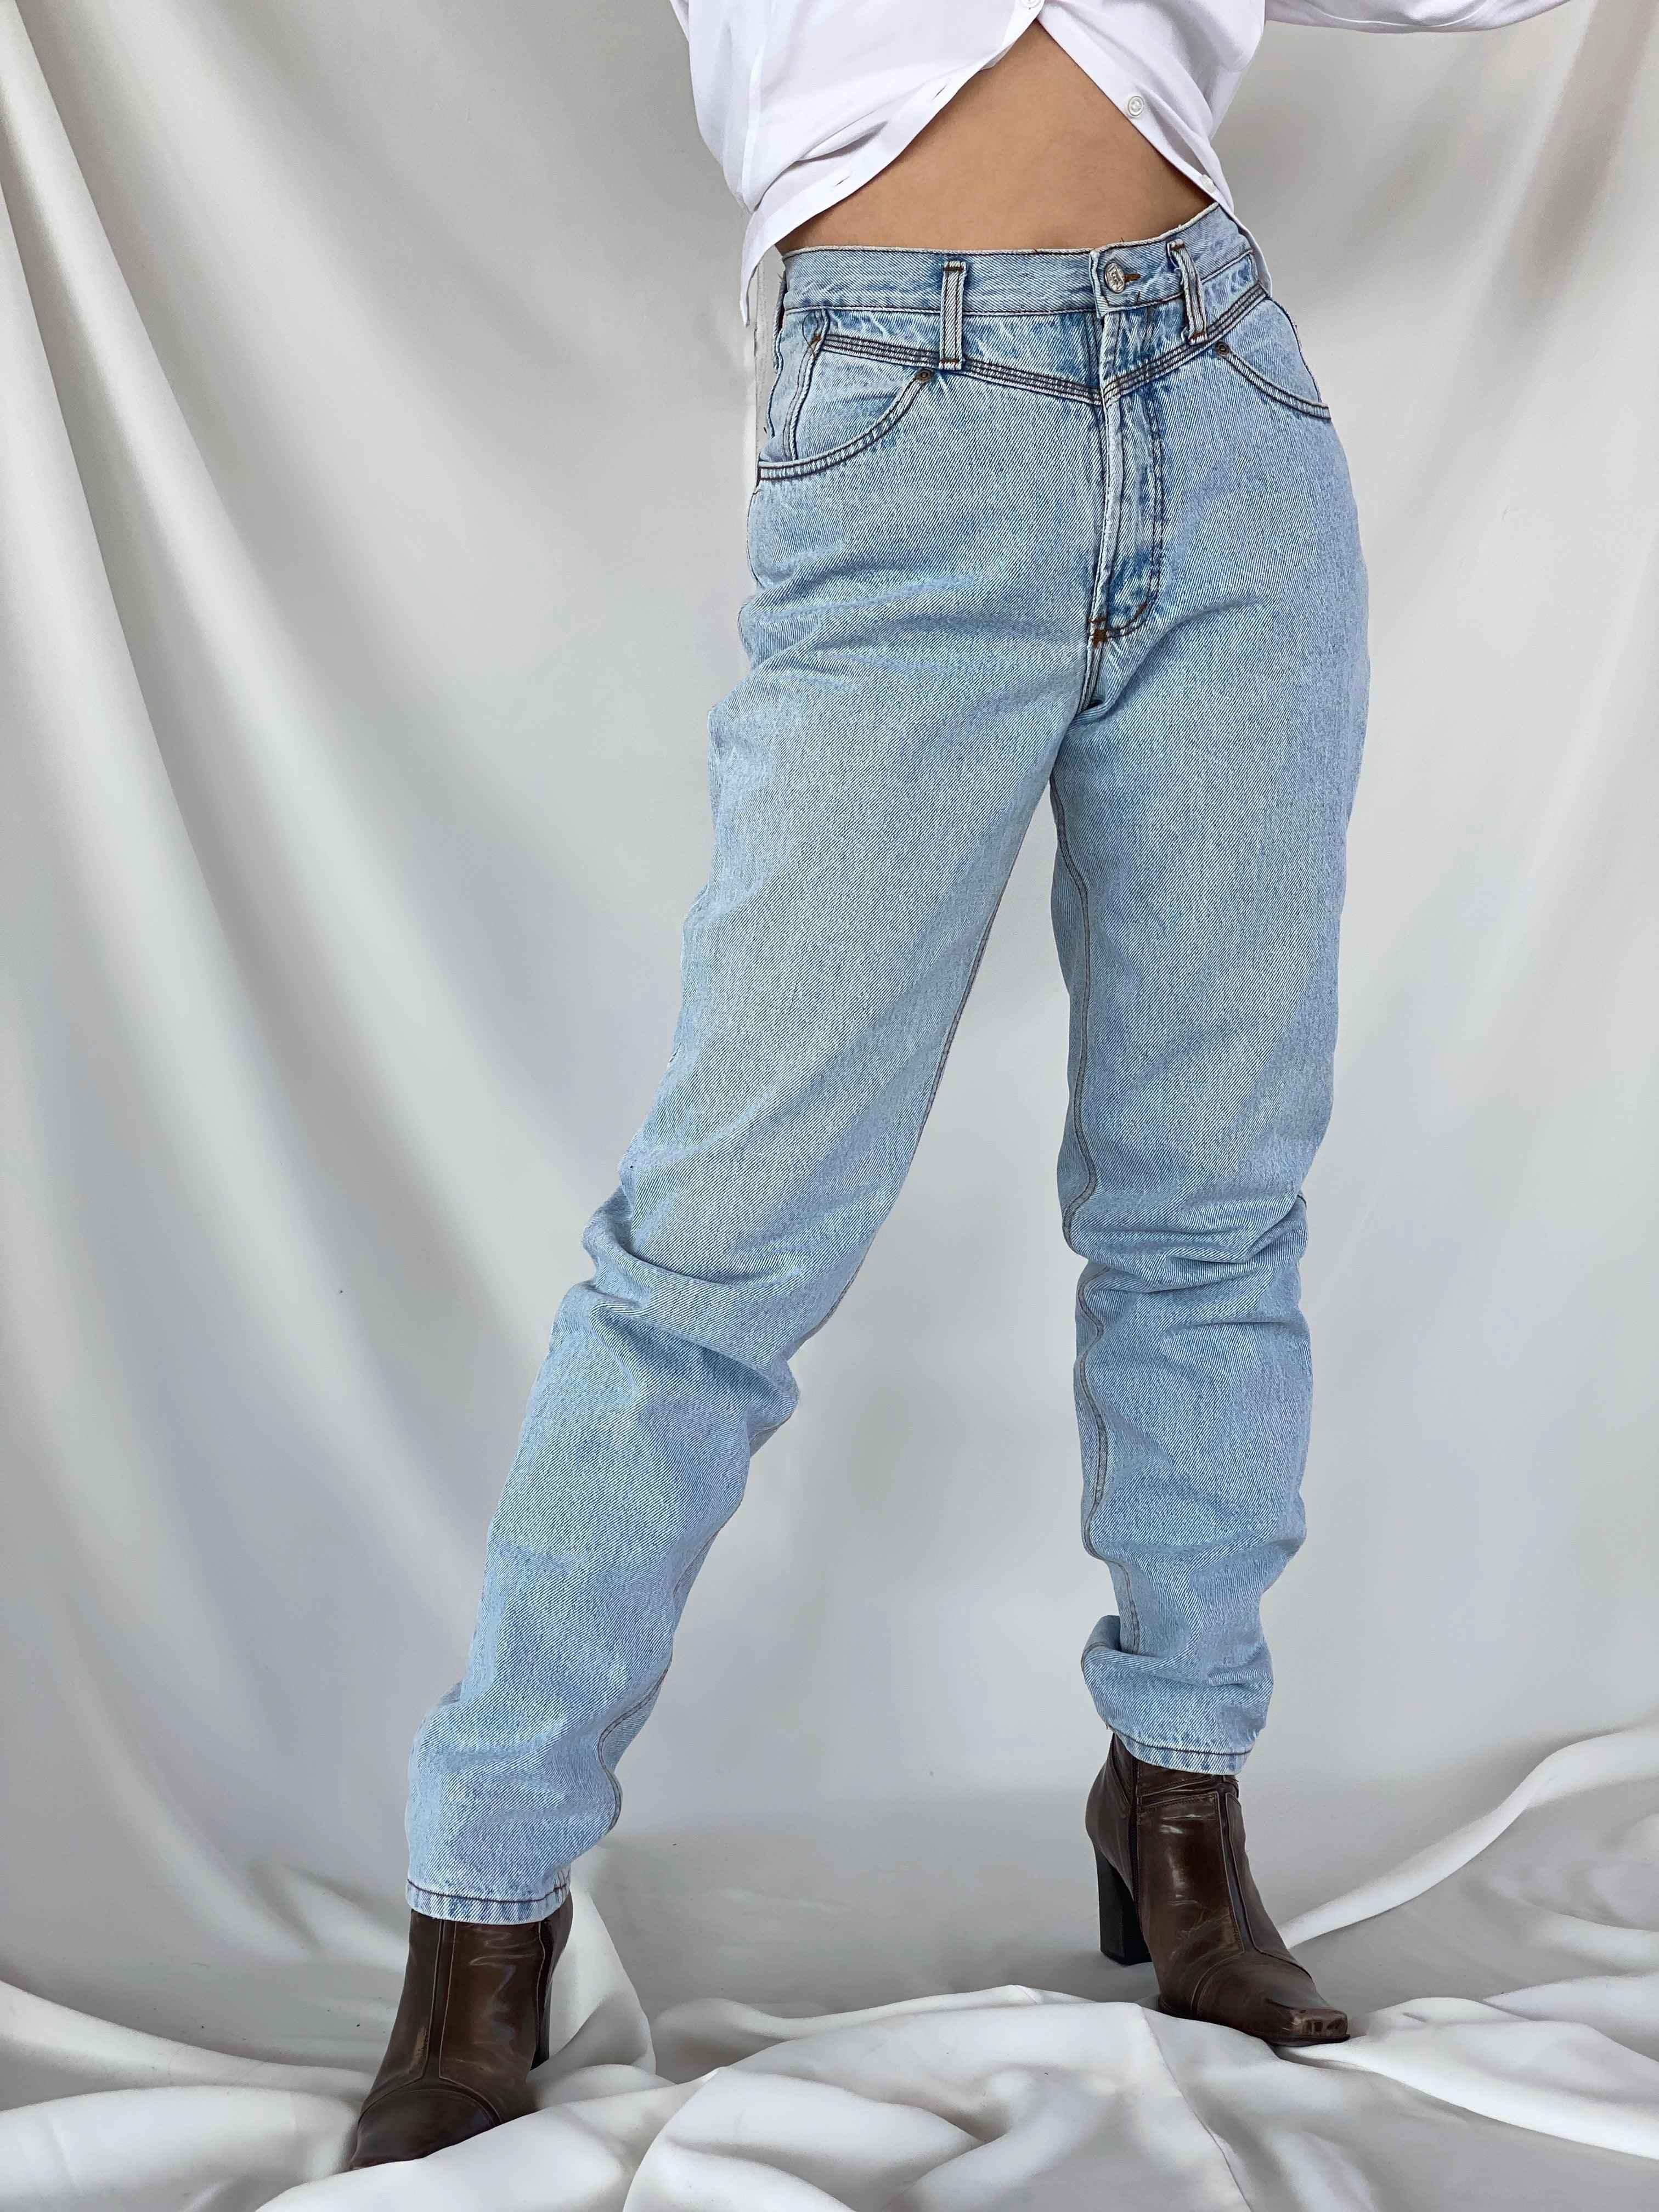 Vintage New Caro Jeans - Balagan Vintage Jeans jeans, vintage jeans